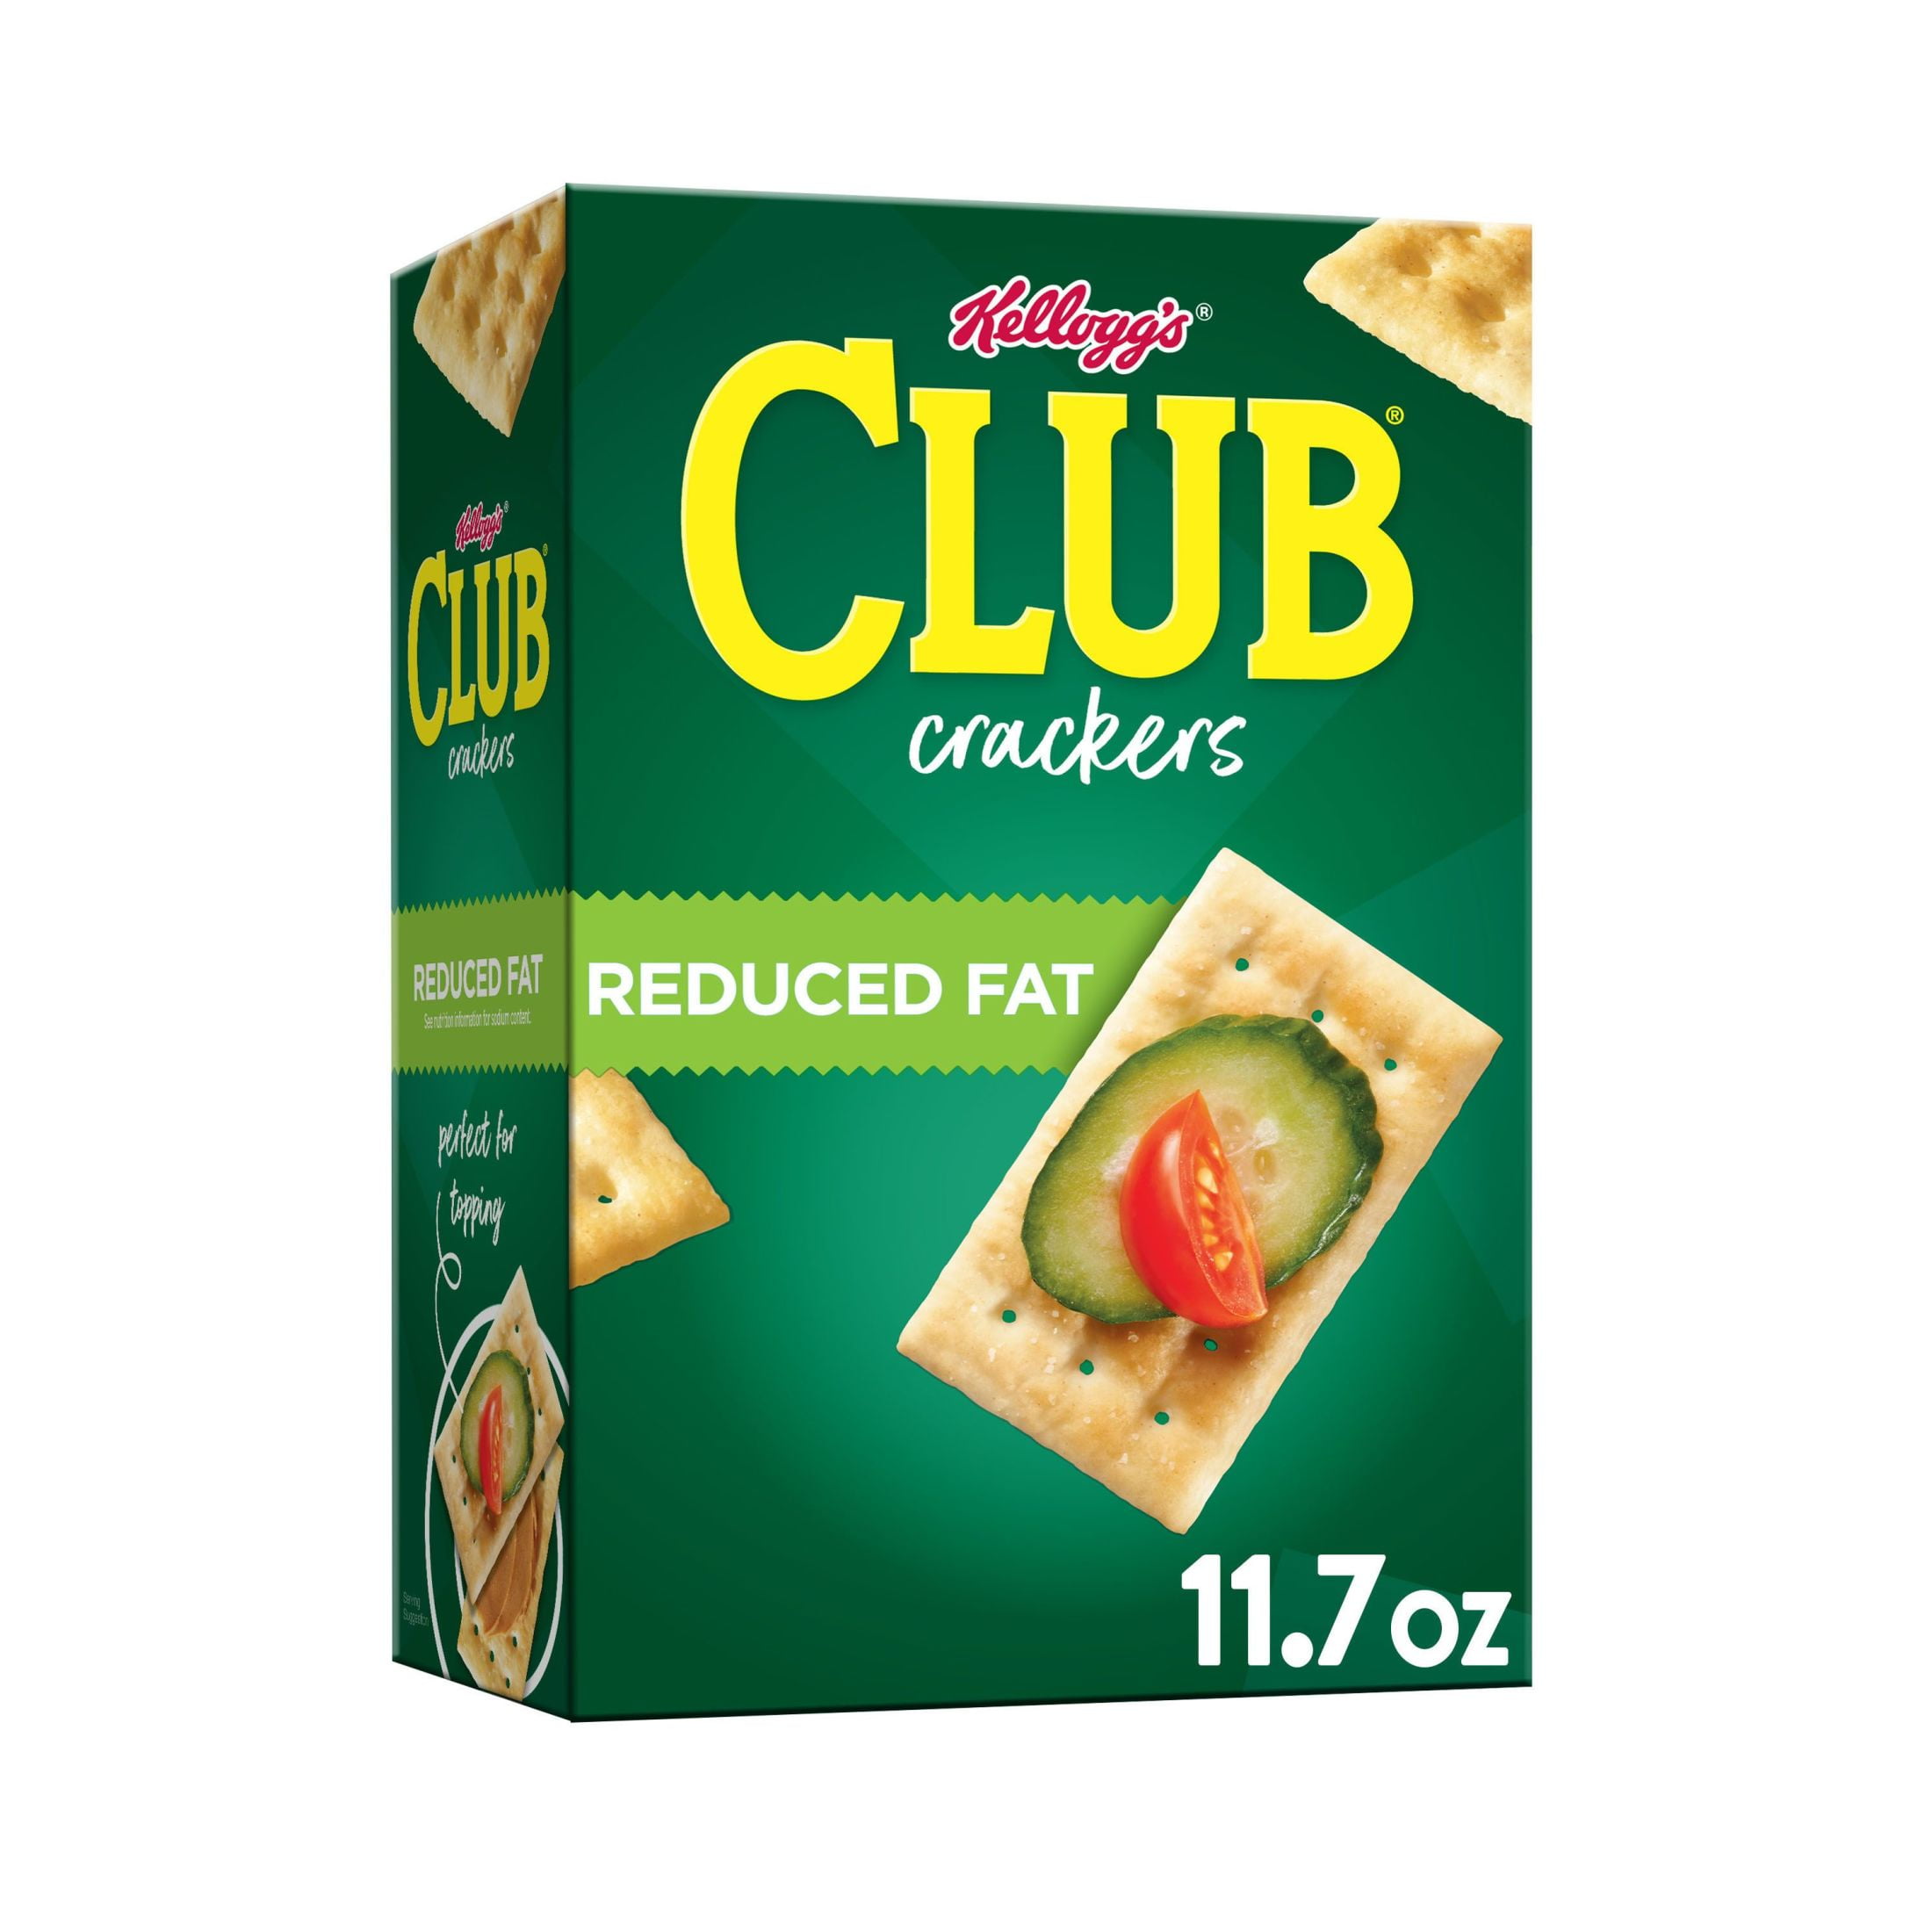 Club Reduced Fat Crackers, 11.7 oz